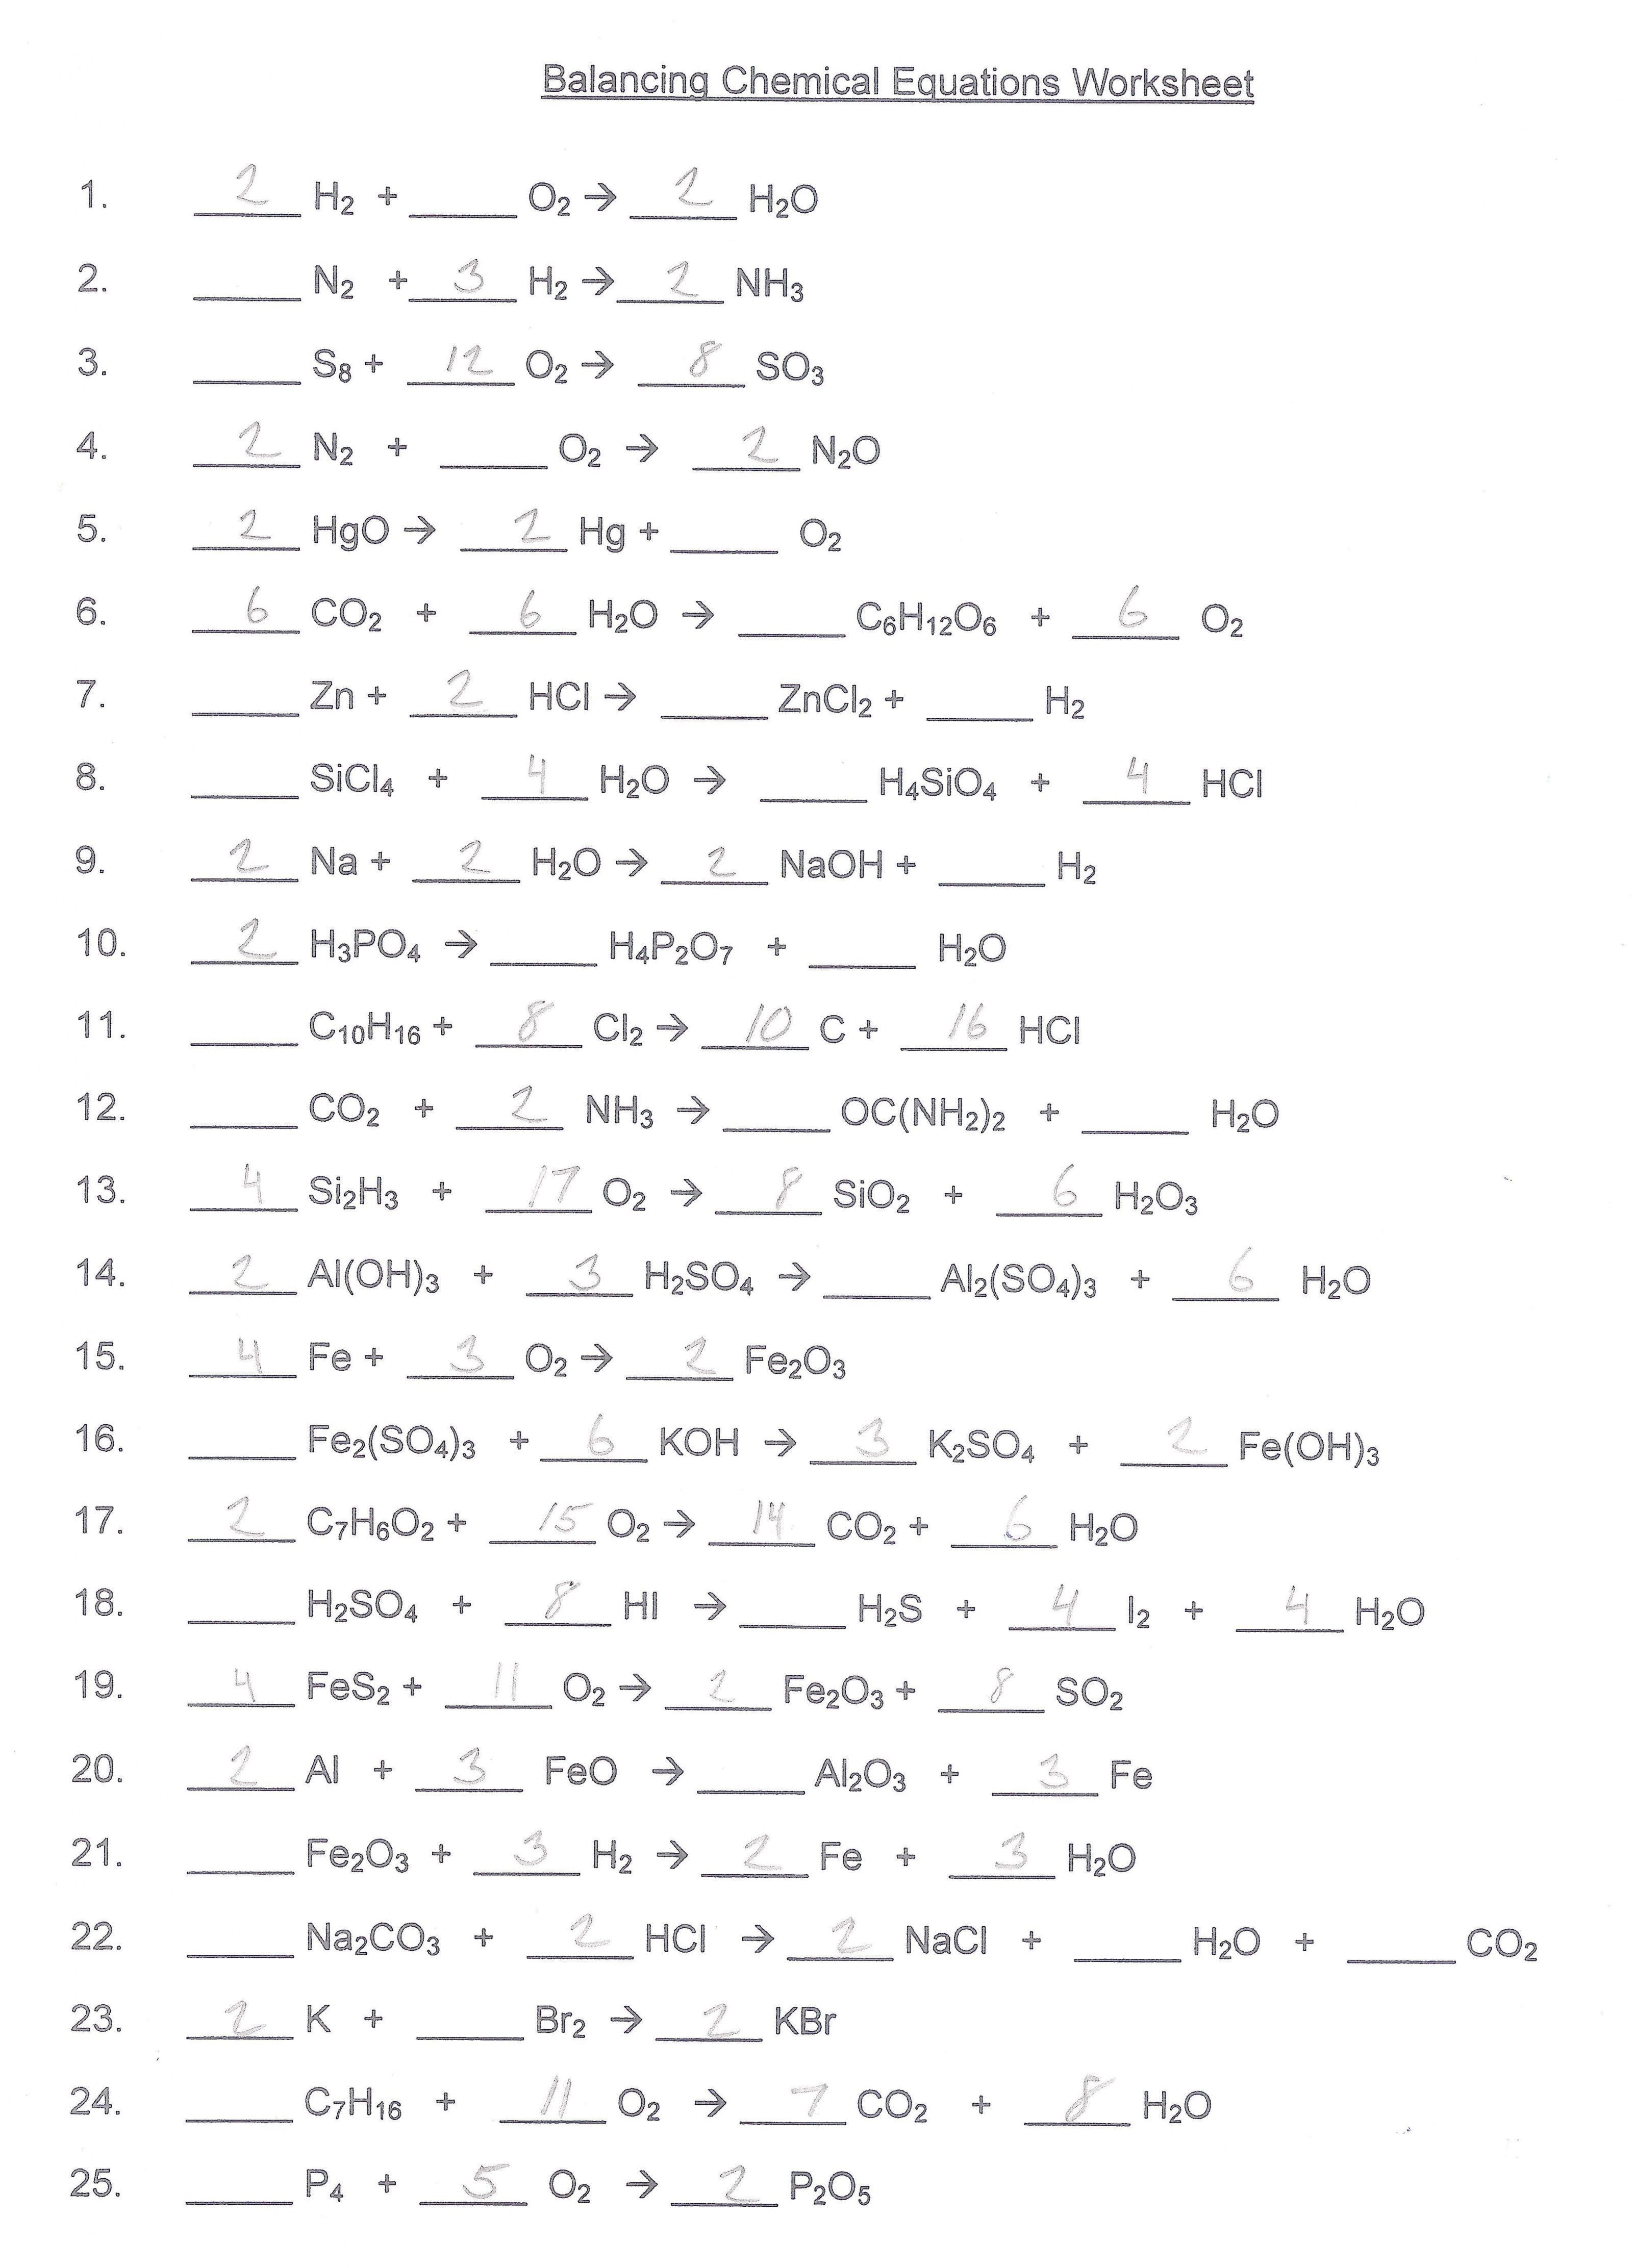 Balancing Chemical Equations Worksheet Answers 1 25  Lobo Black